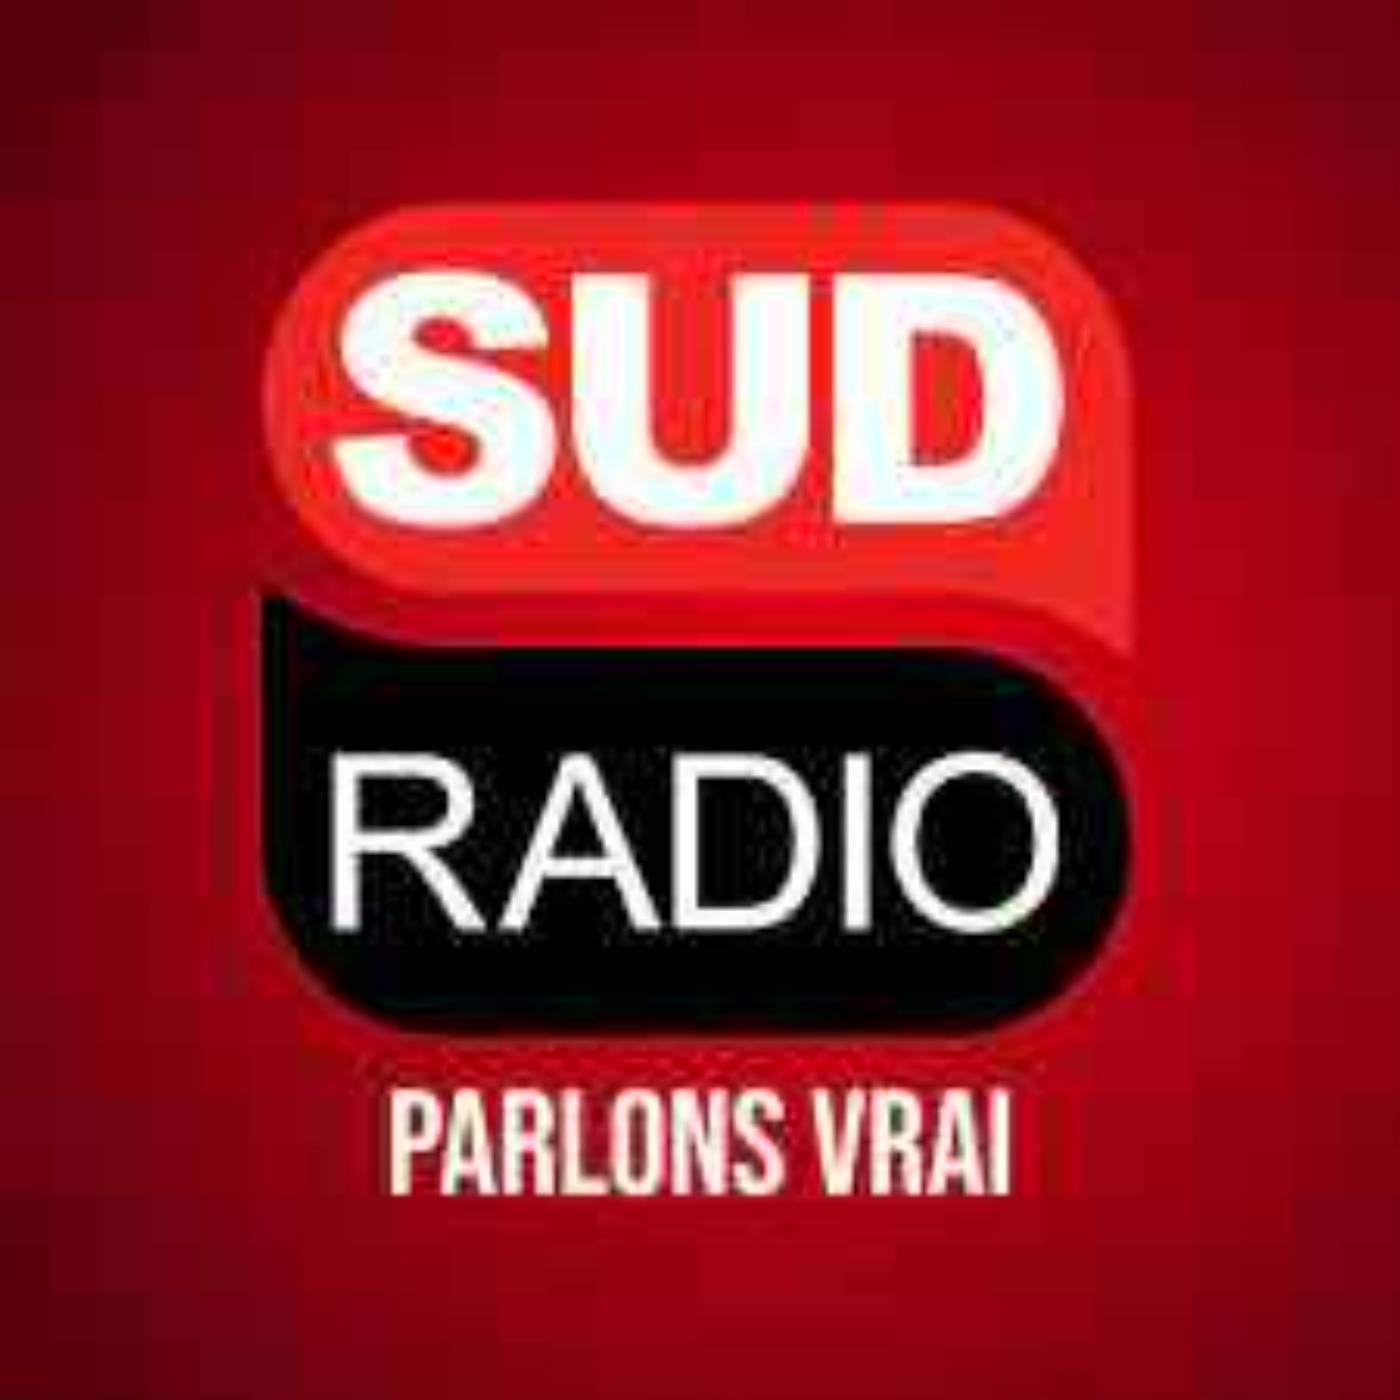 Sud Radio : Ruptures au Sénégal